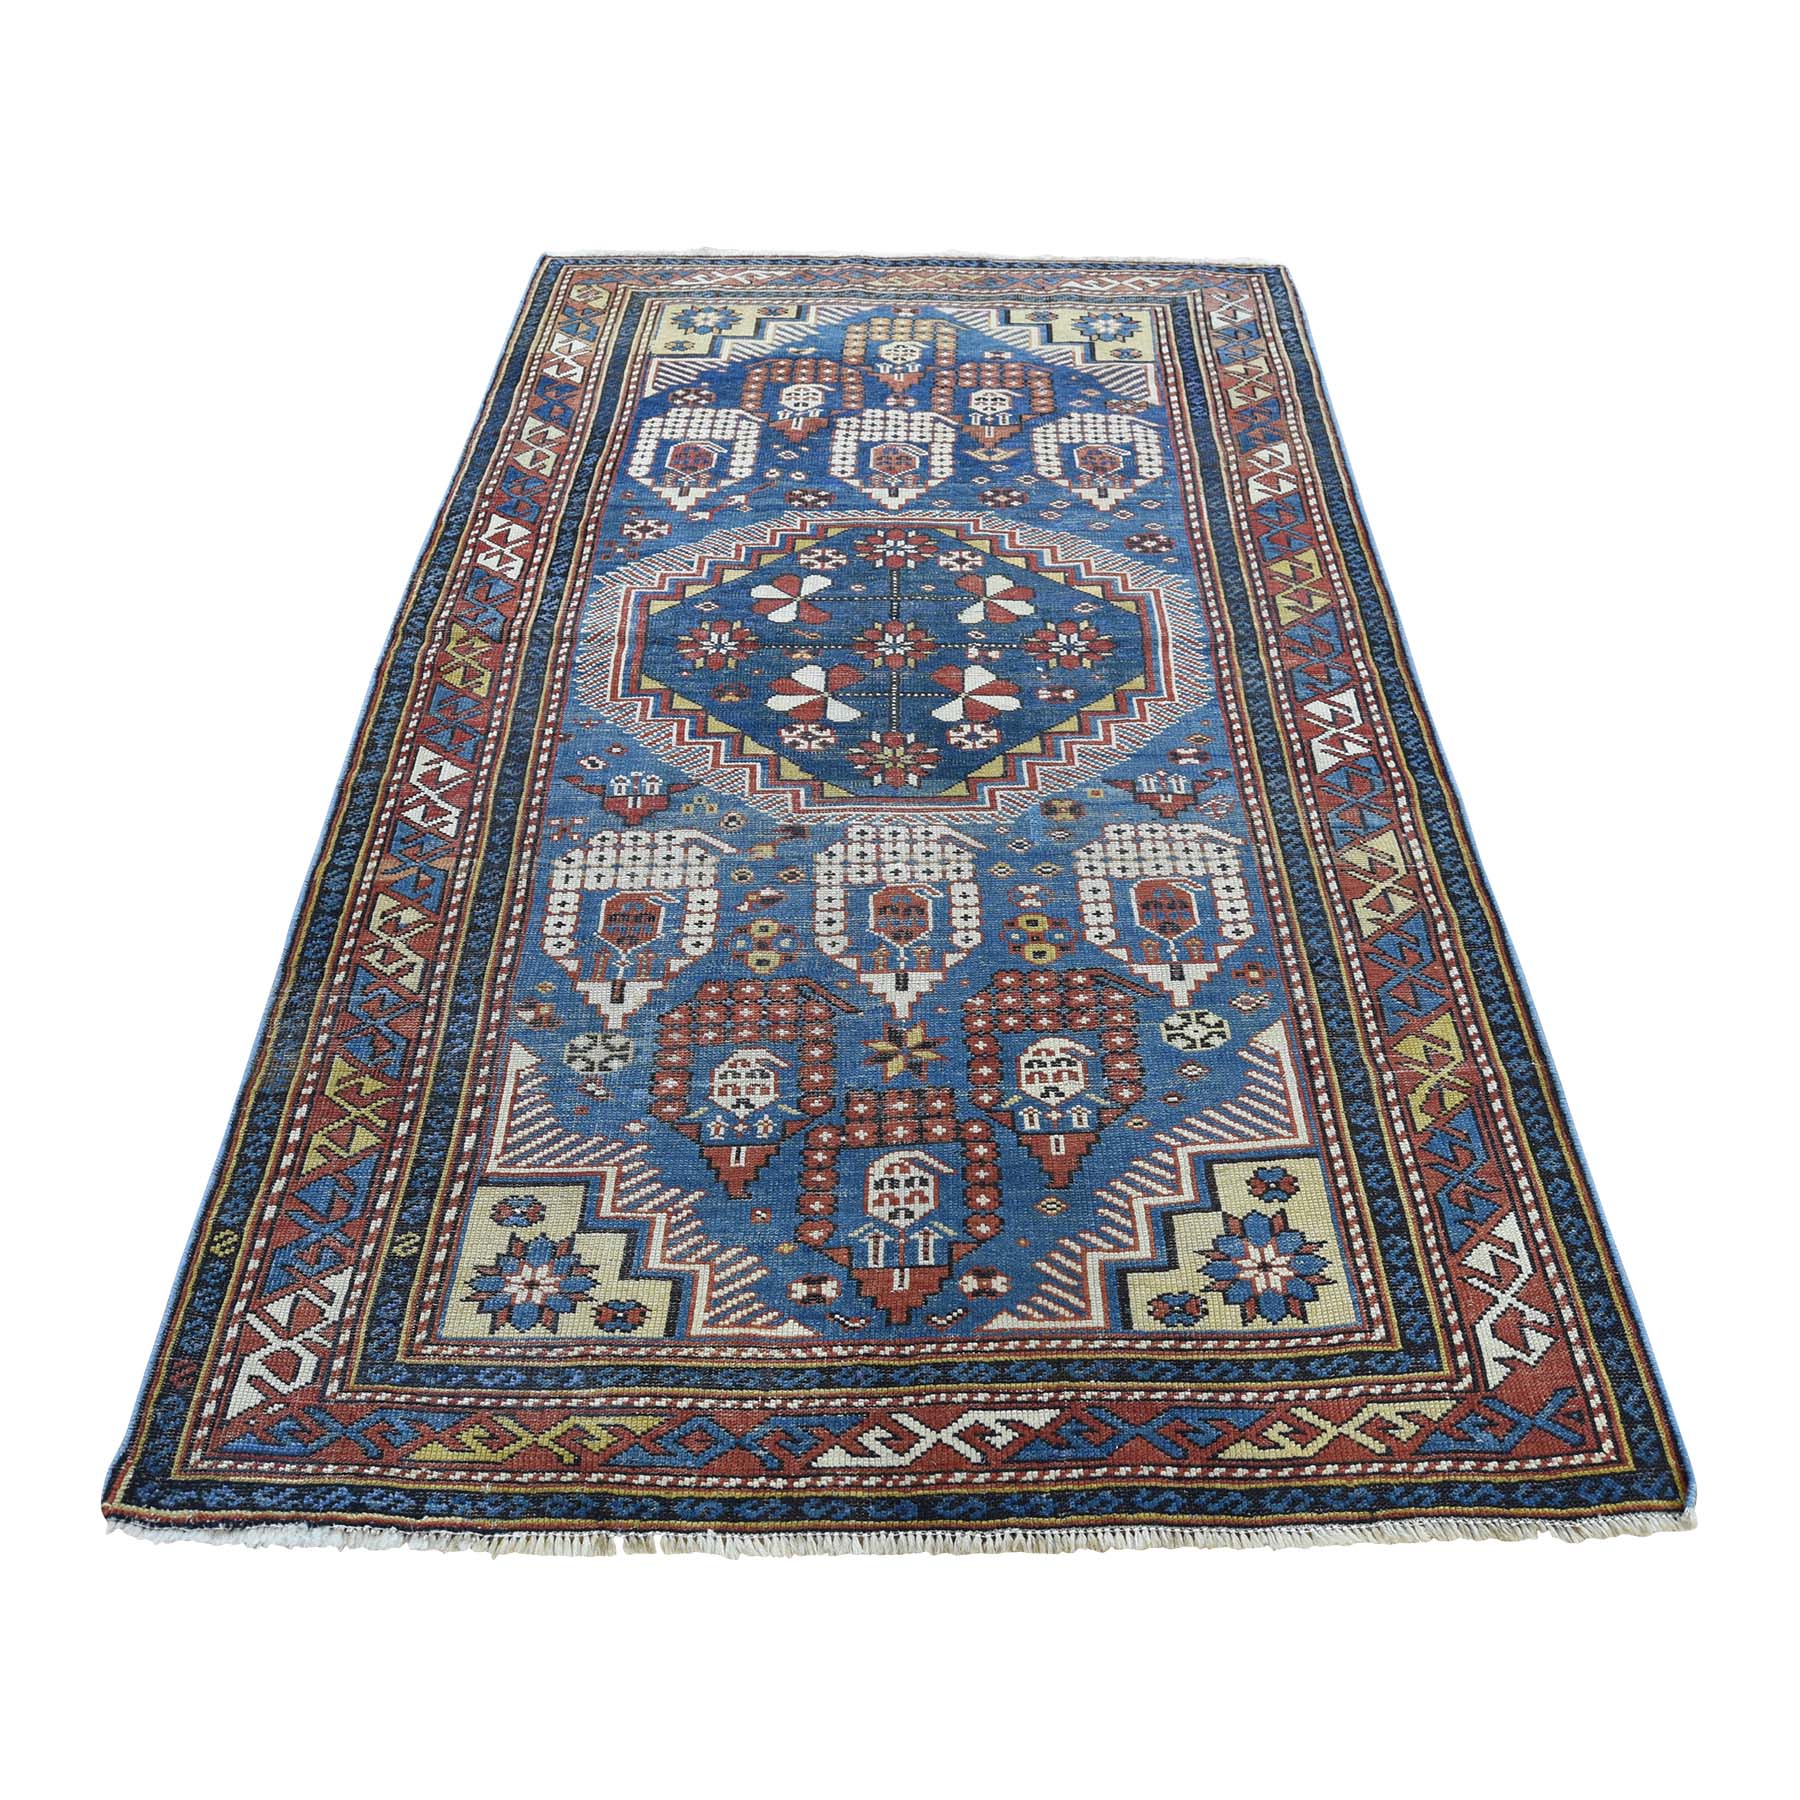 3'10"x6'3" Antique Caucasian Kazak Even Wear Hand Woven Oriental Rug 